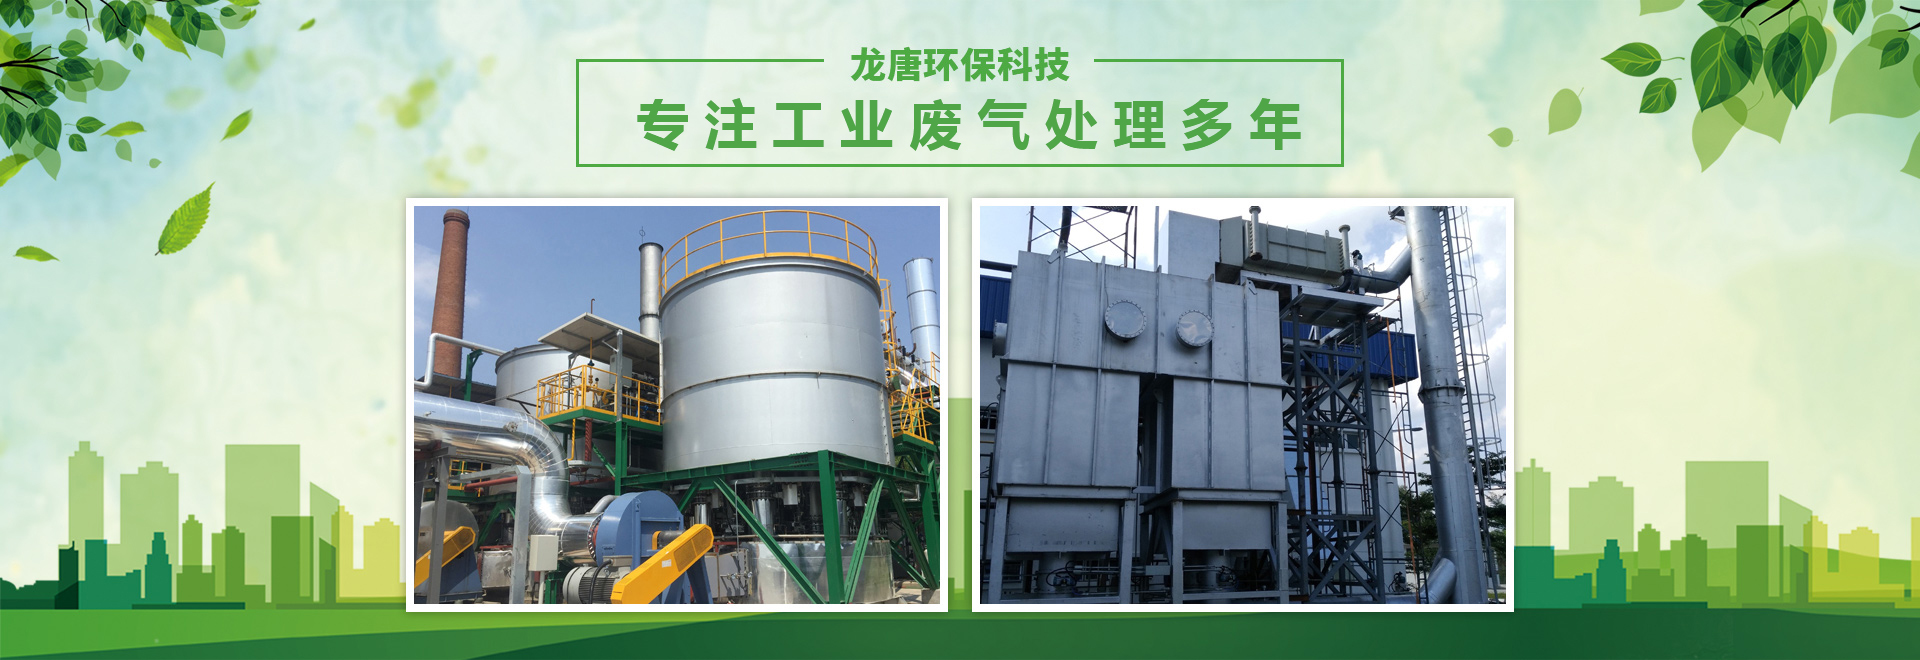  Chongqing Industrial Waste Gas Treatment